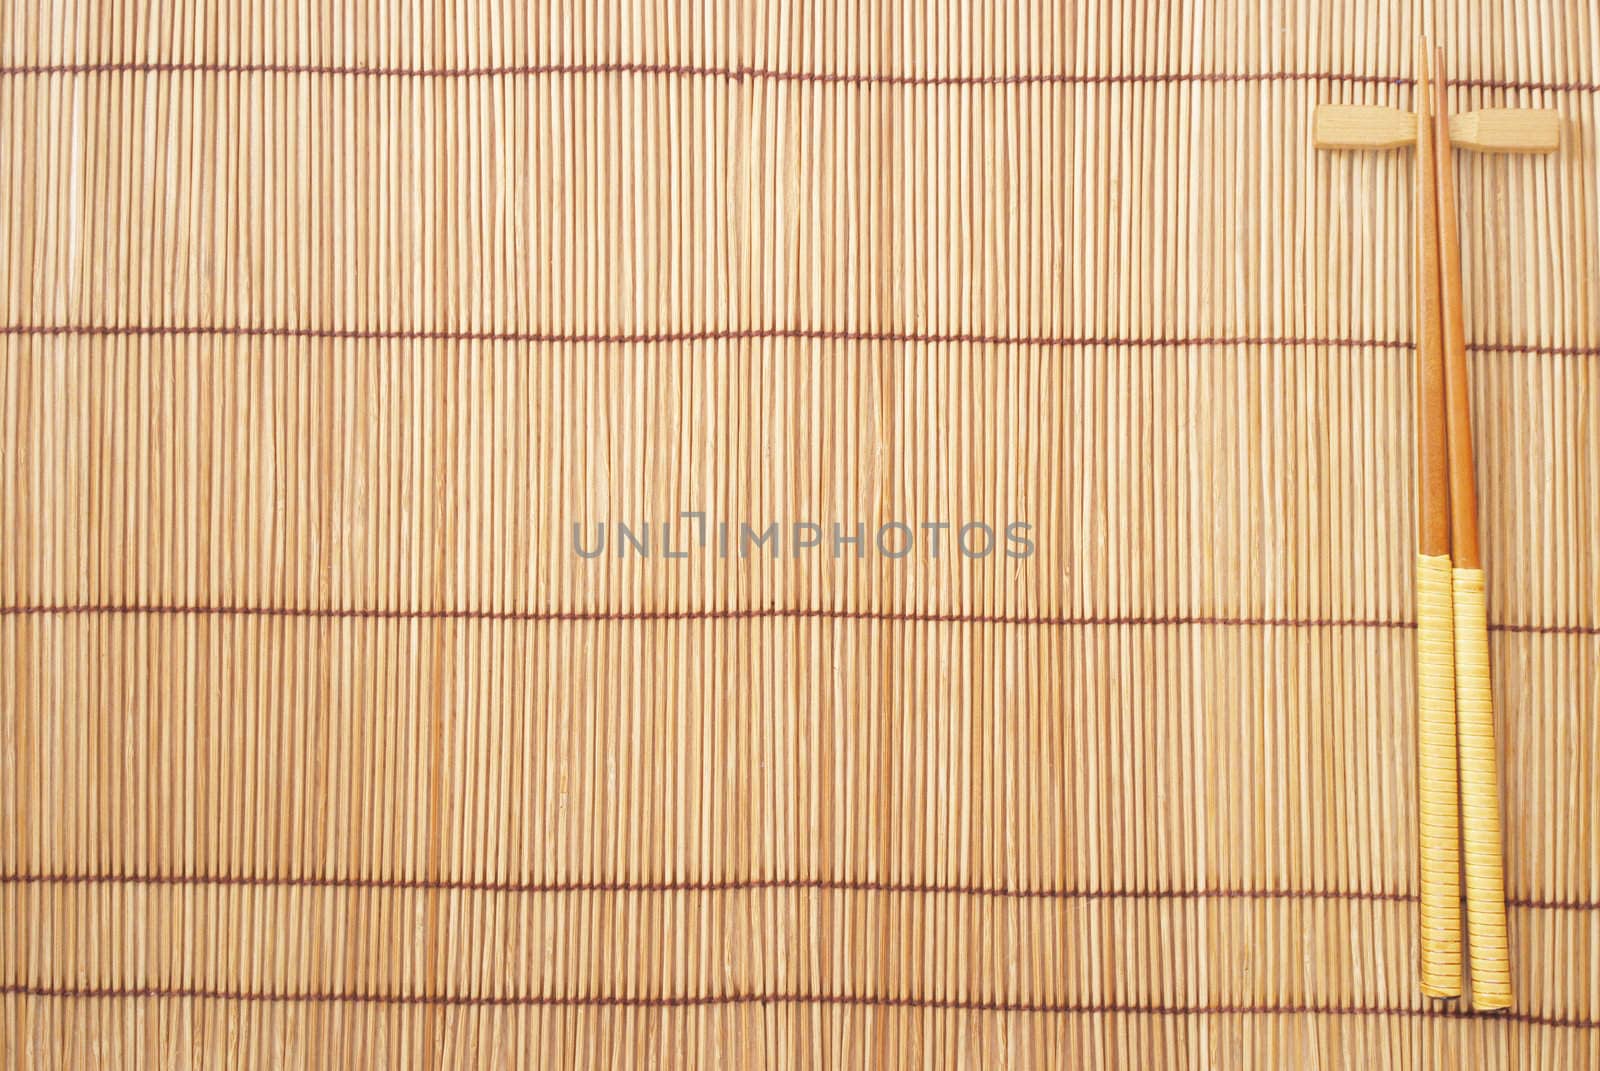 Chopsticks on brown bamboo matting background 